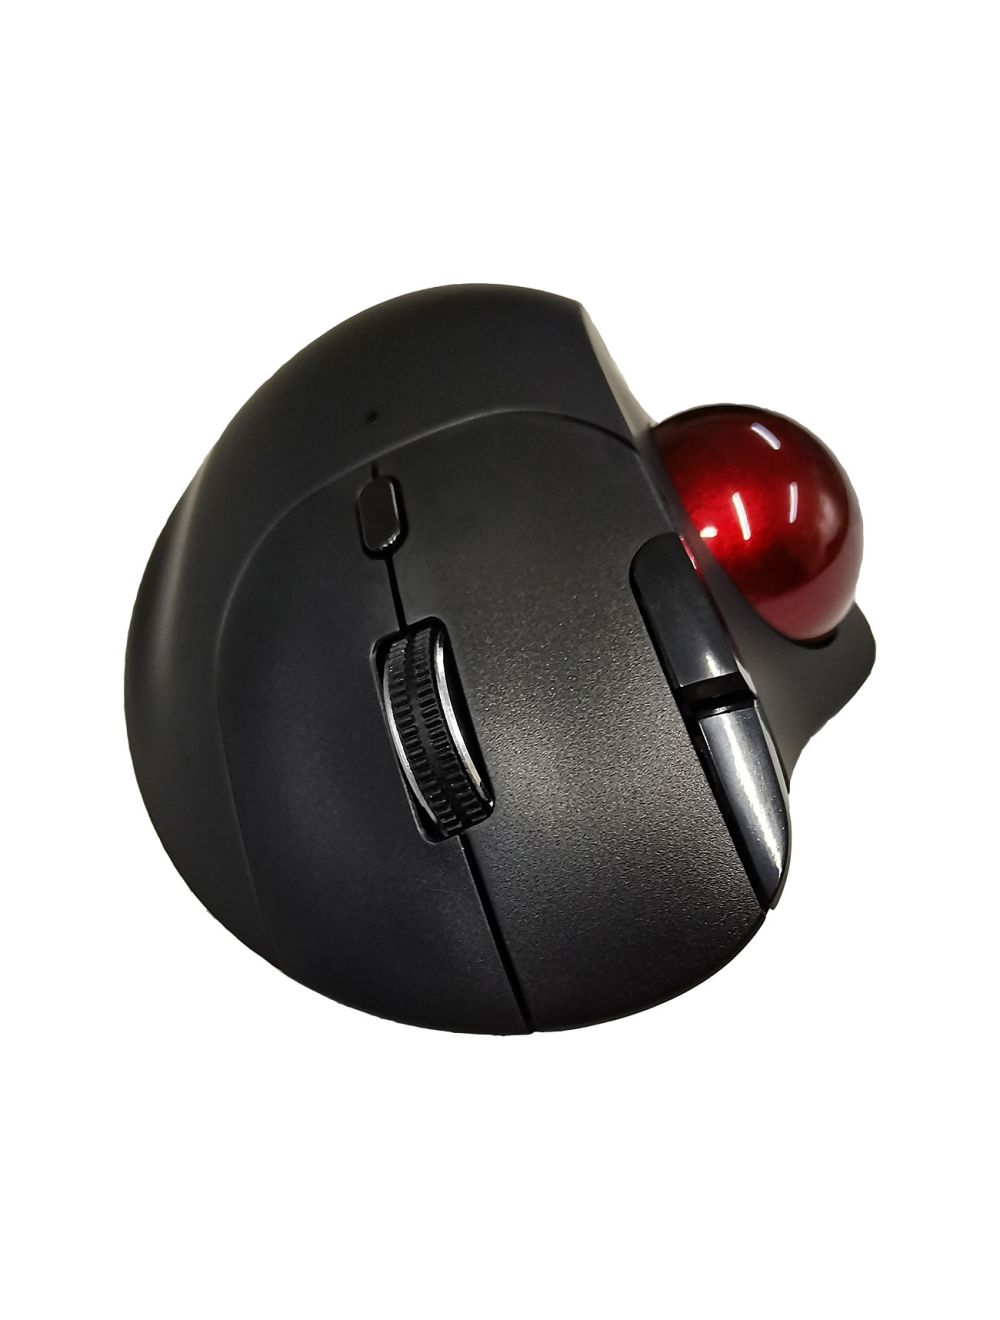 Trackball Semi Vertical Mouse